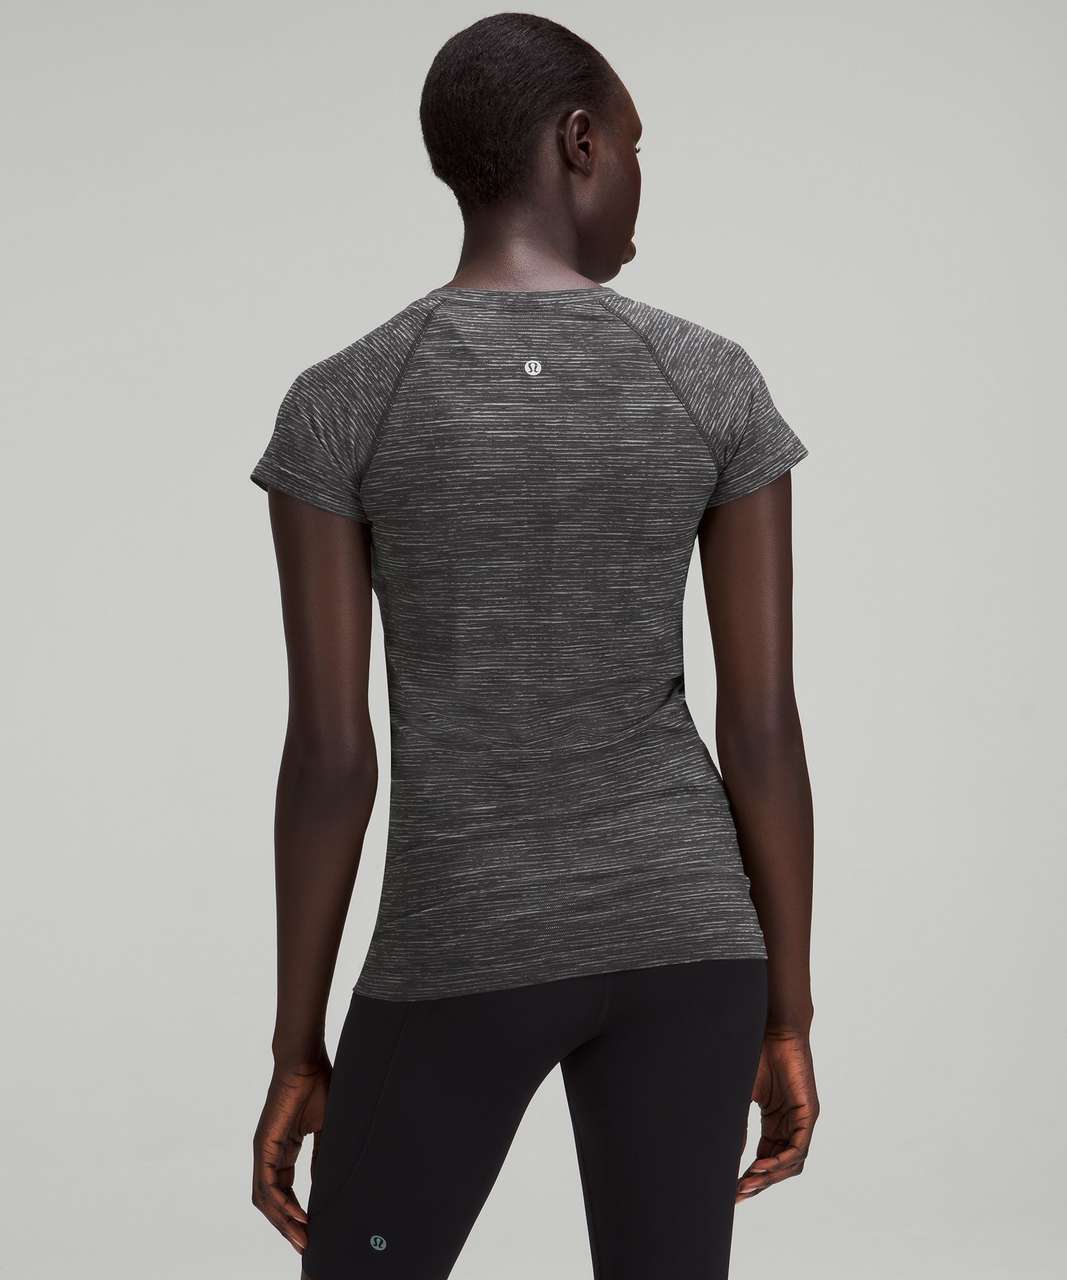 Lululemon Swiftly Tech Short Sleeve Shirt 2.0 - Wee Are From Space Graphite  Grey - lulu fanatics